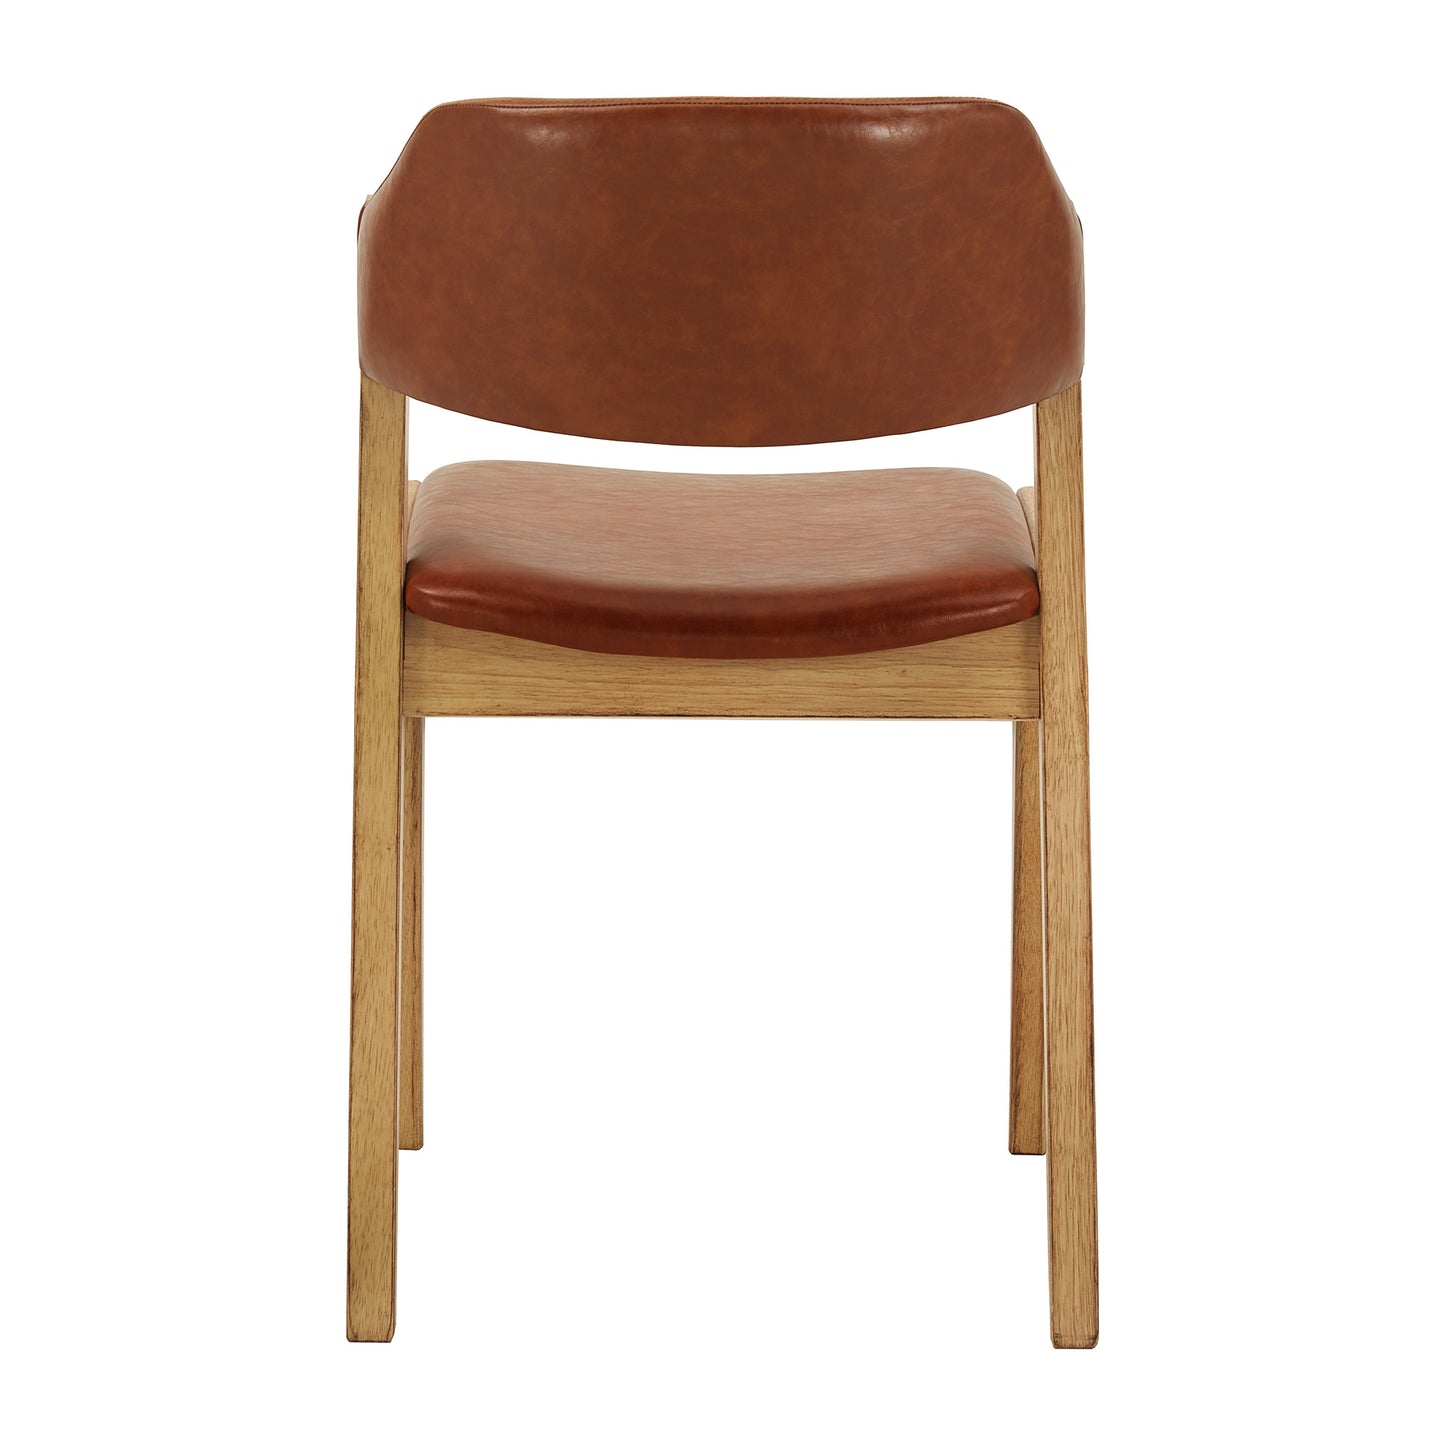 Modern Scandinavian Light Oak Finish Dining Chairs - Caramel Faux Leather Cushion